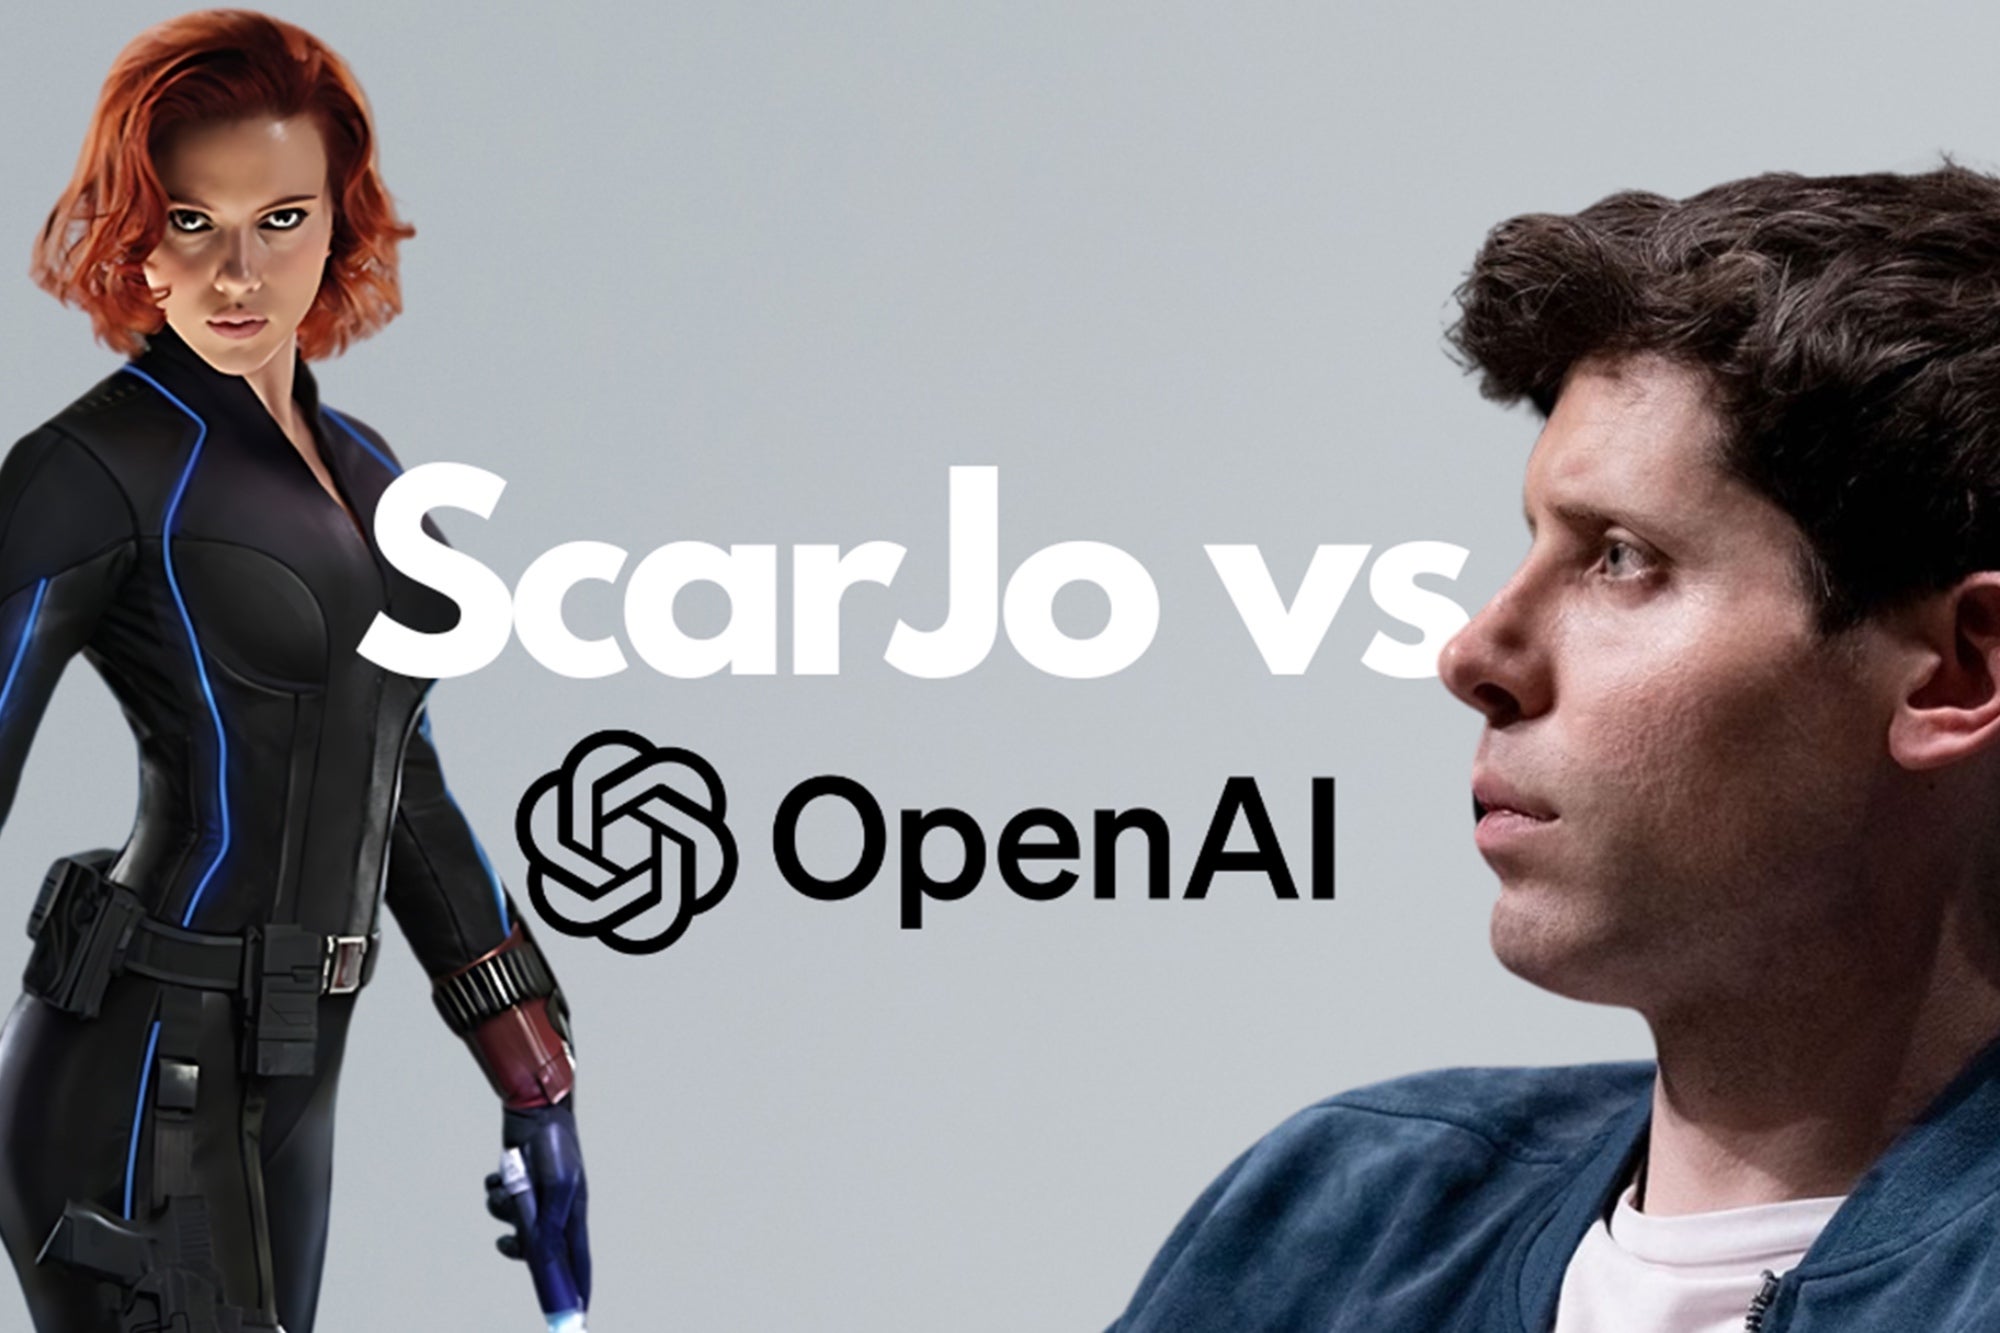 Did OpenAI steal Scarlett Johansson’s voice? 5 Critical Lessons for Entrepreneurs in The AI Era [Video]